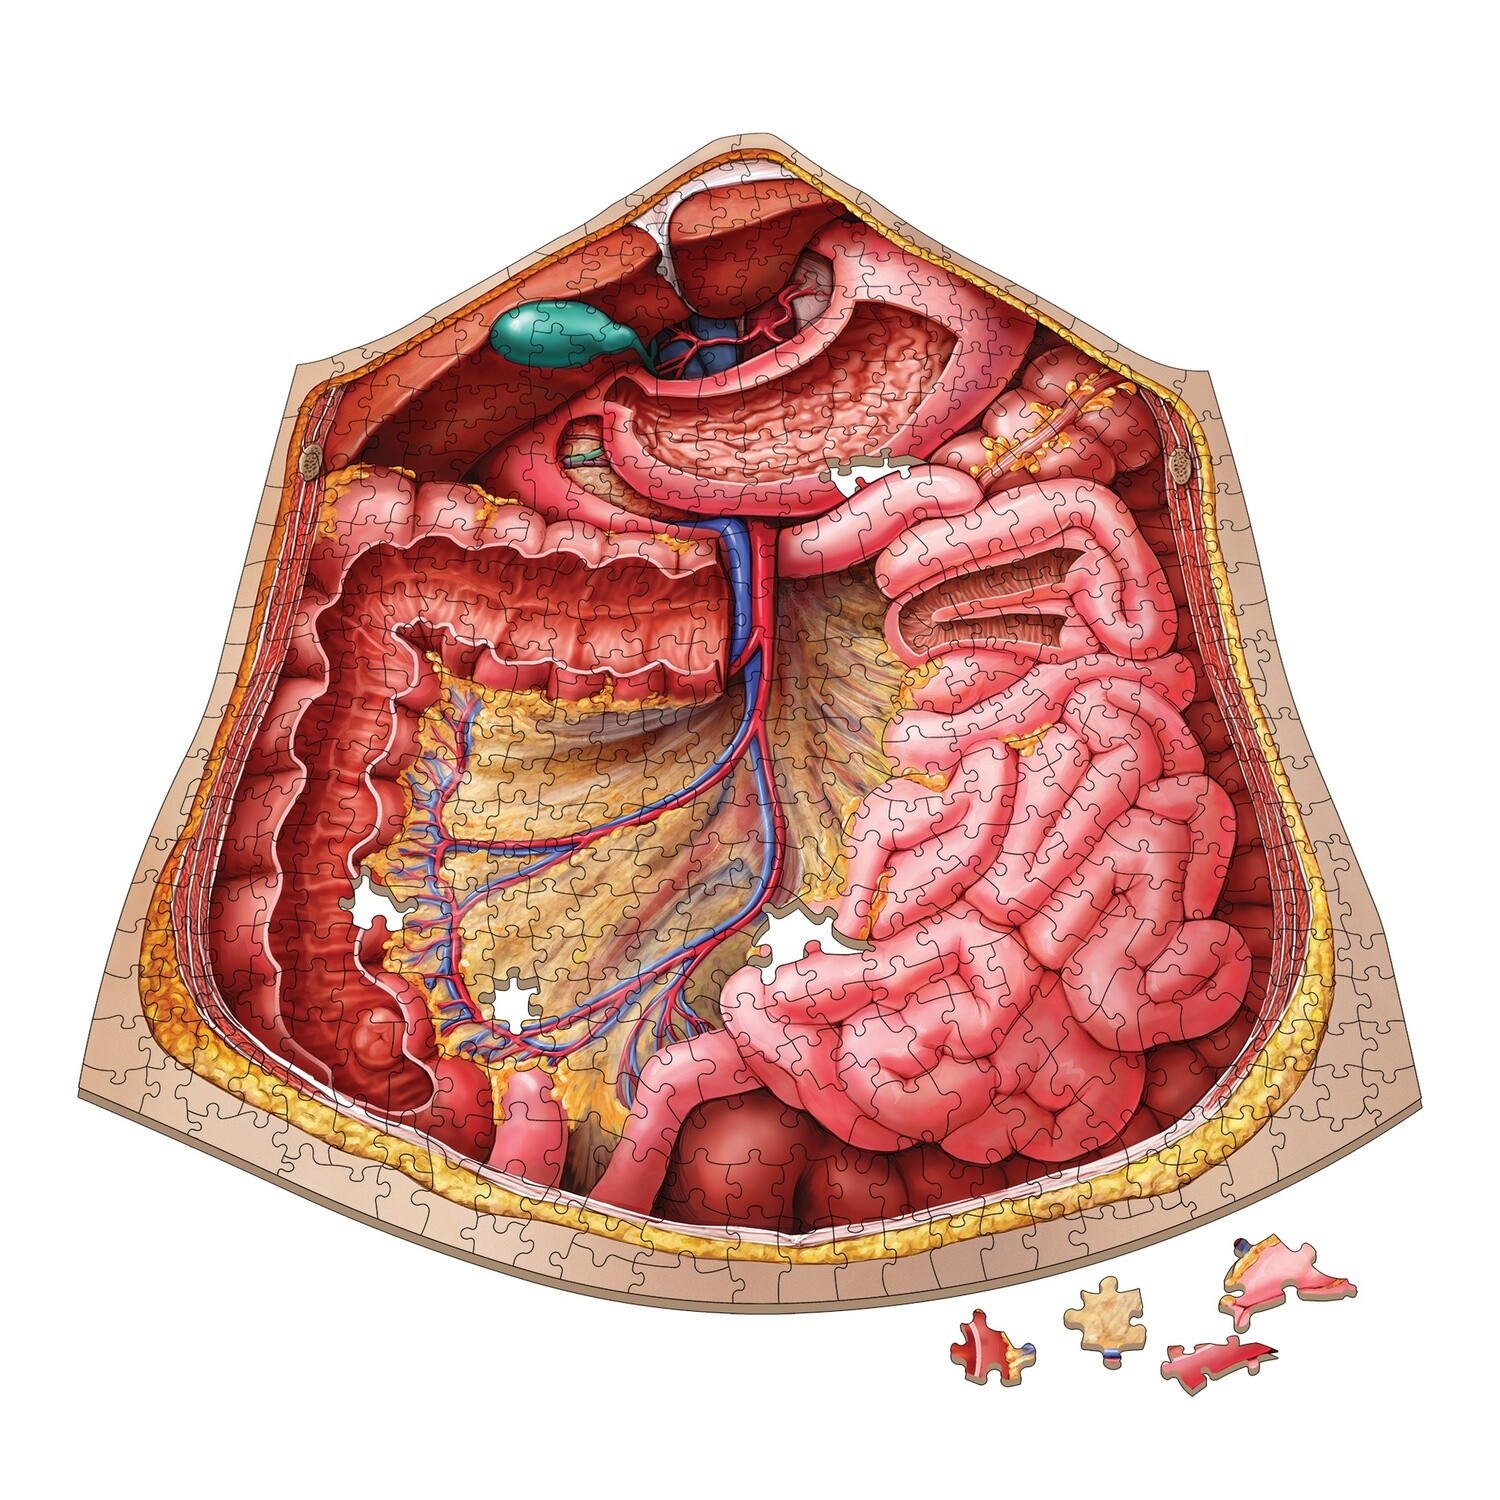 Dr. Livingston's Anatomy Jigsaw Puzzle: The Human Abdomen